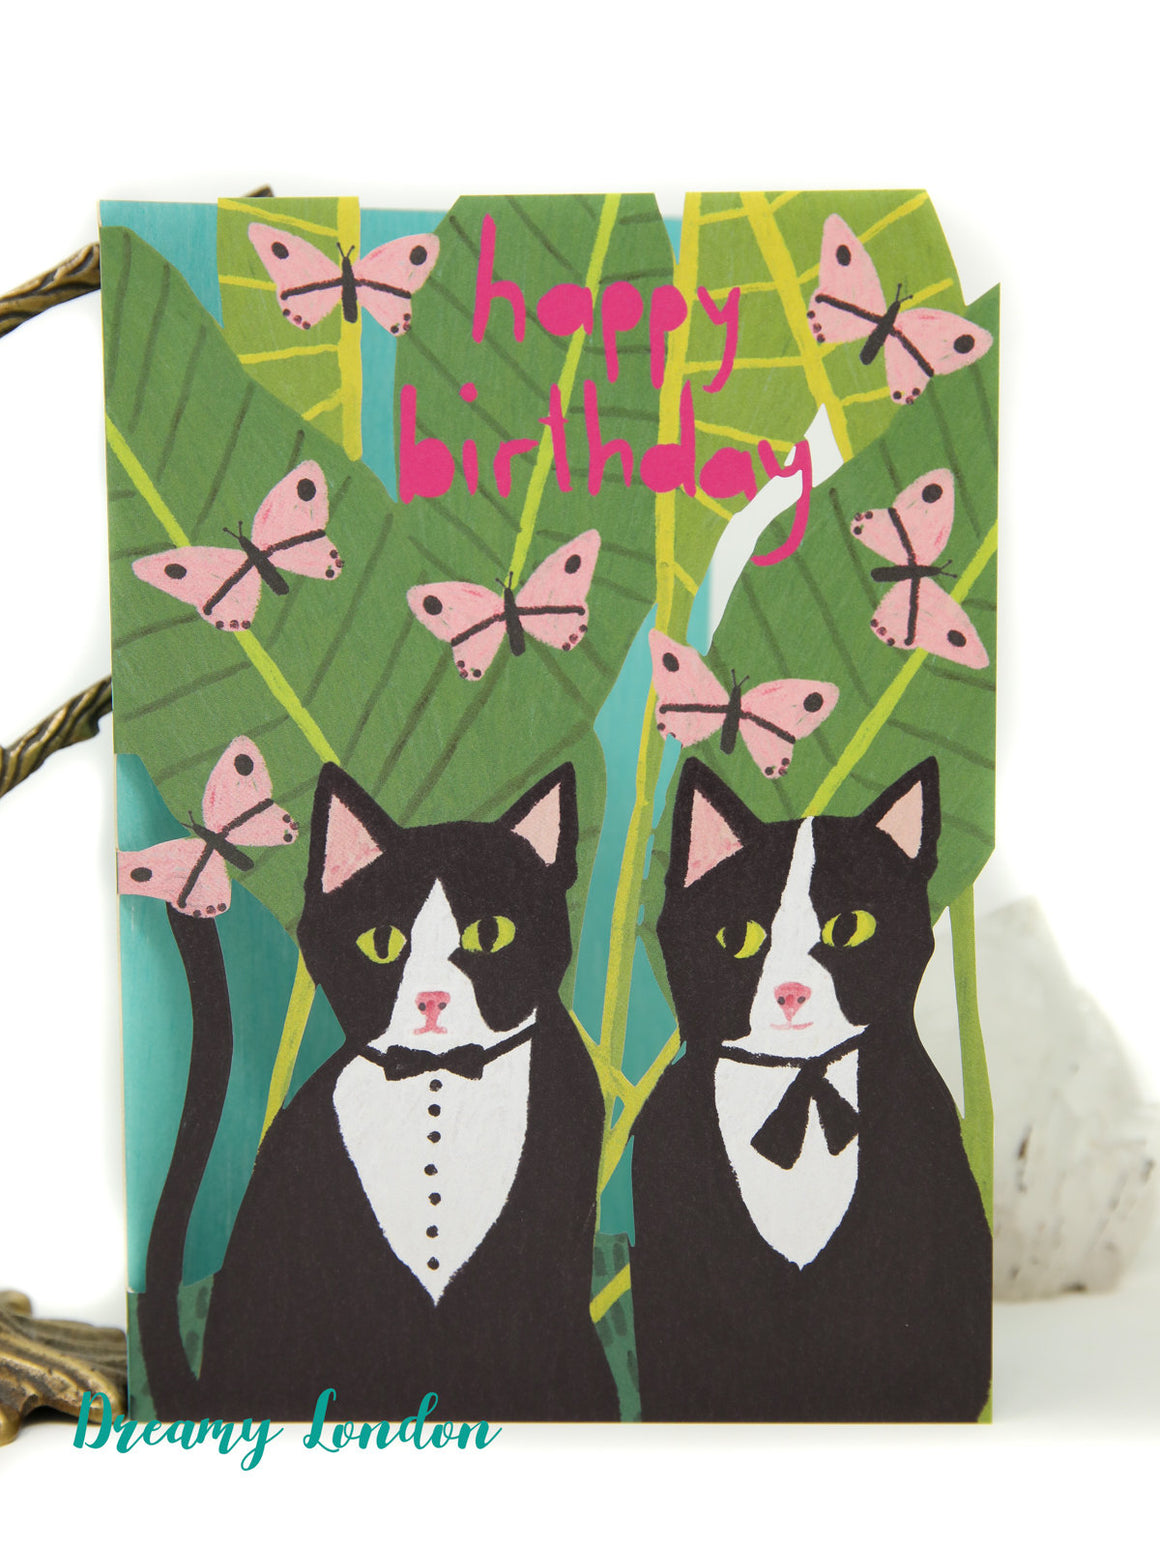 Black and White Cats Birthday Card - dreamylondon